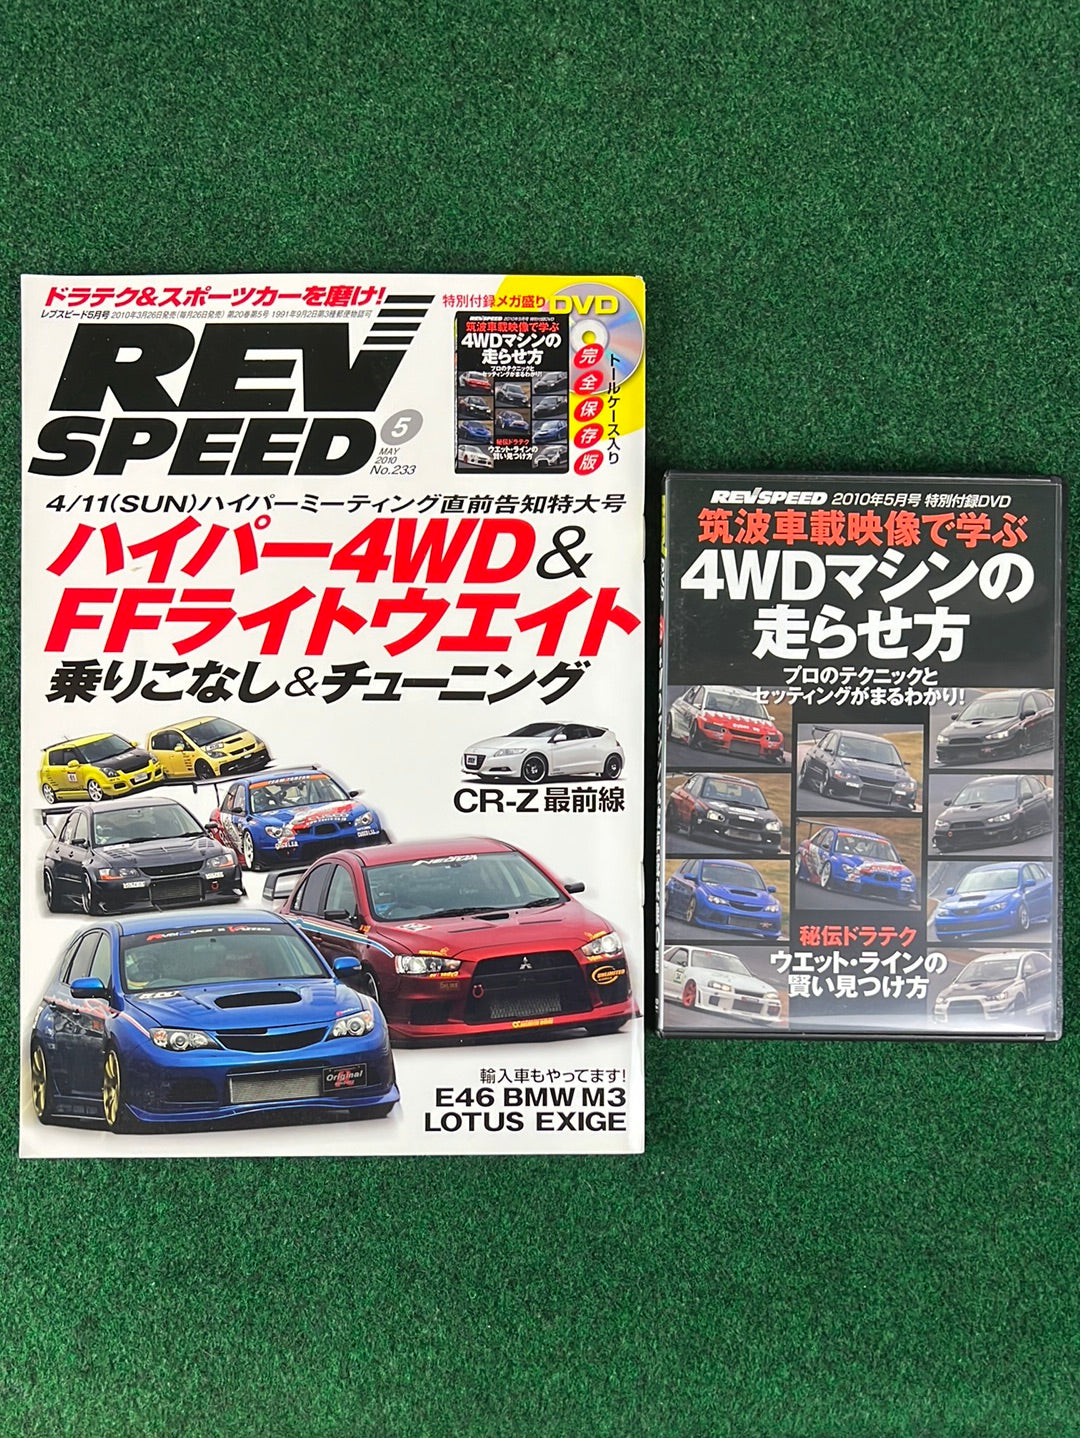 REVSPEED Magazine & DVD - Vol. 233 May 2010